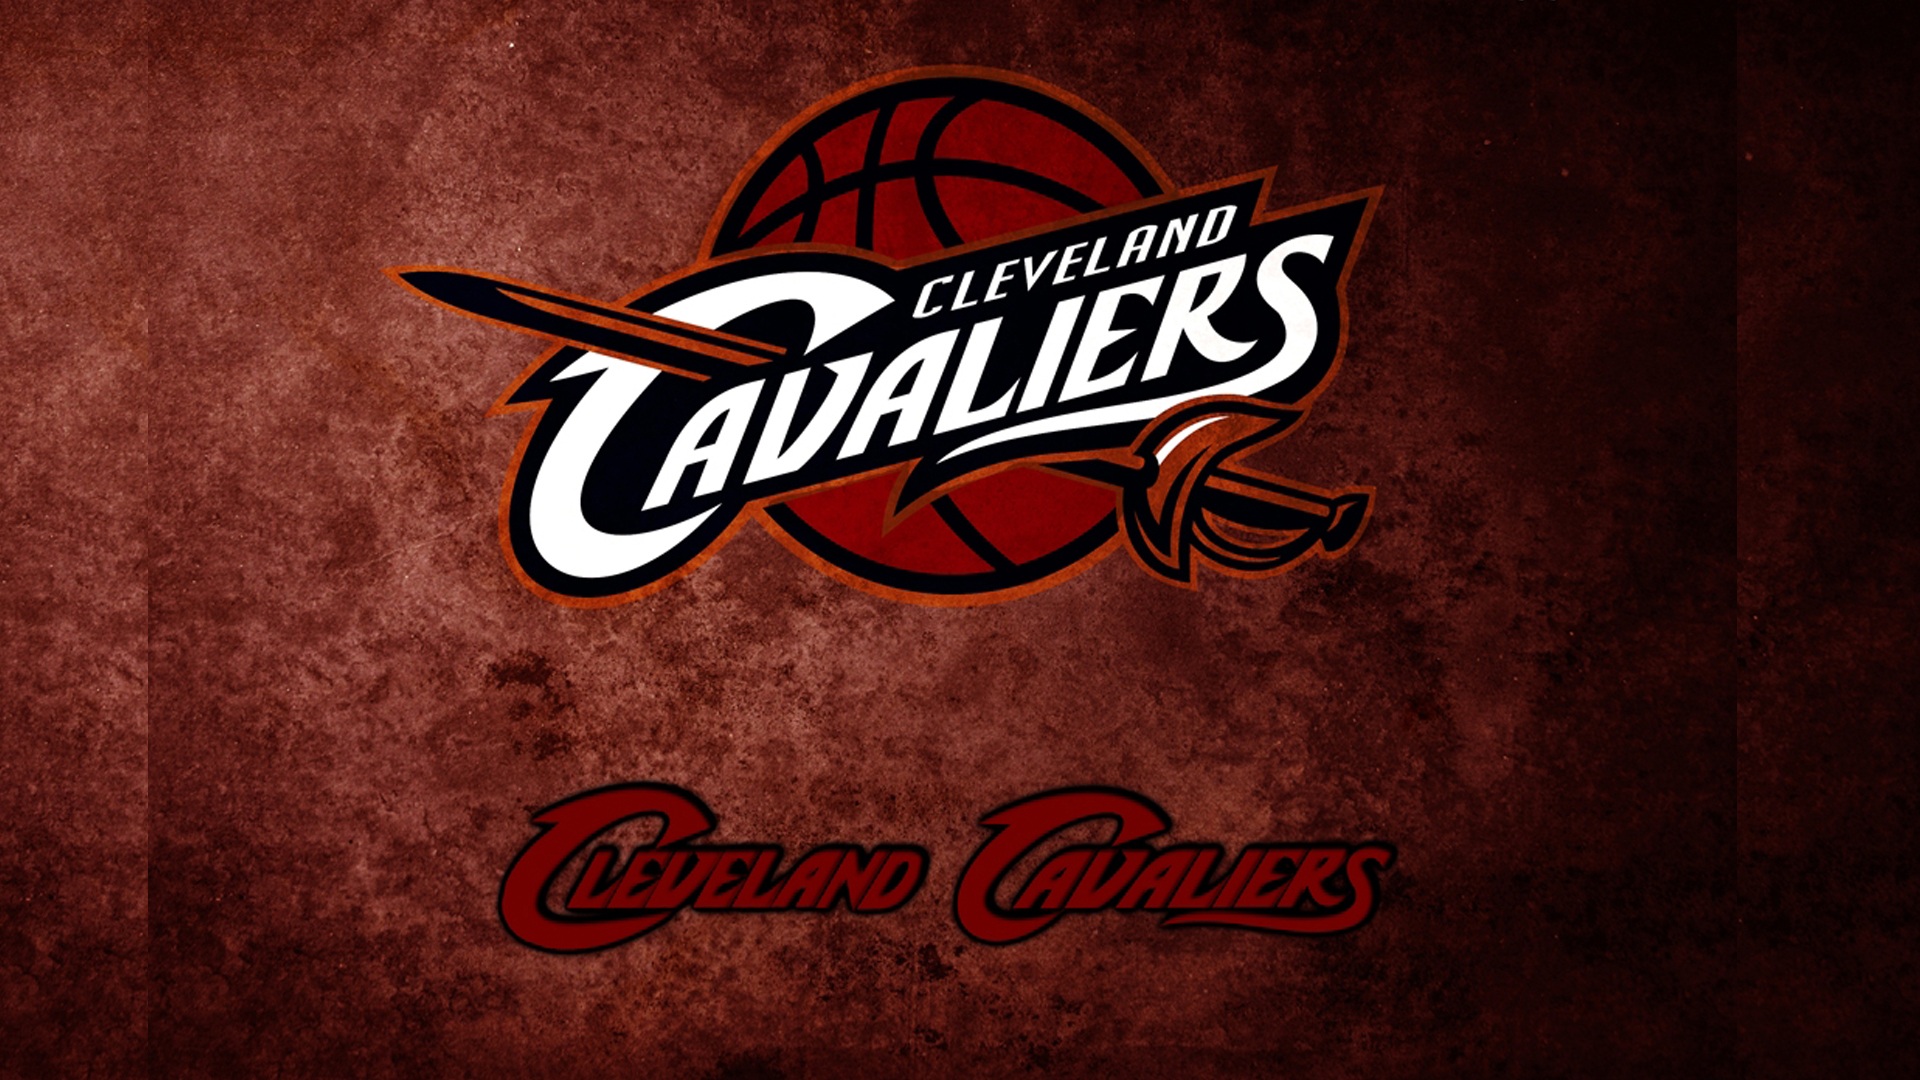 2015 Cleveland Cavaliers Wallpaper Wallpapersafari Afalchi Free images wallpape [afalchi.blogspot.com]